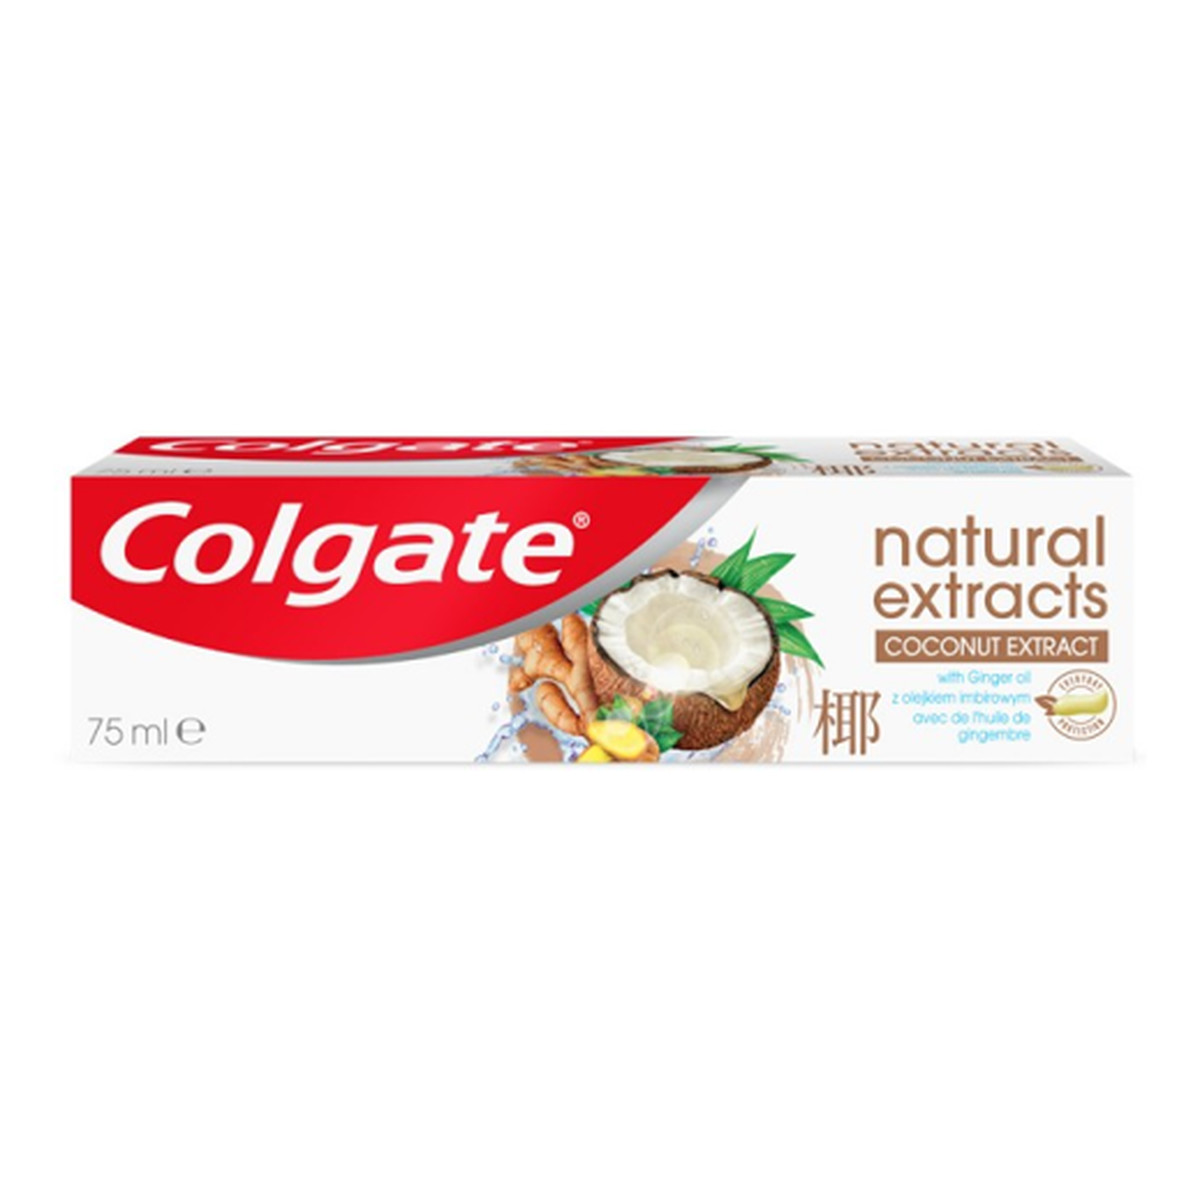 Colgate Natural Extracts Coconut Extract Pasta do zębów z fluorem 75ml